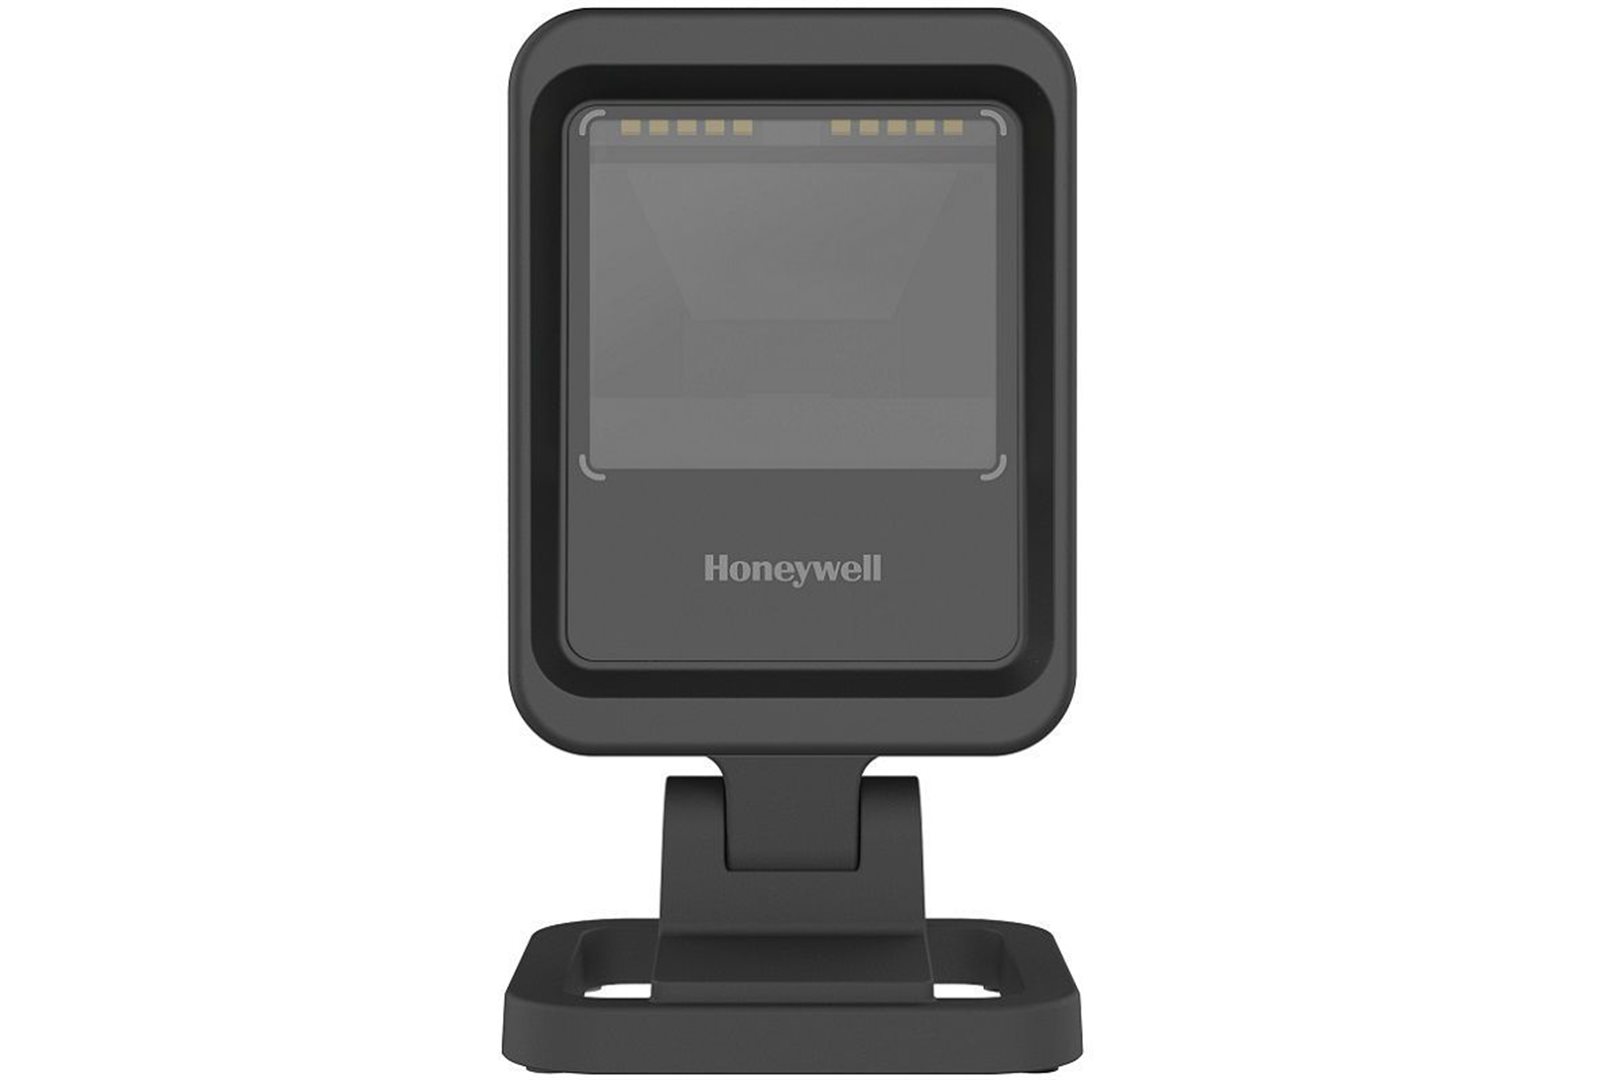 Honeywel Genesis XP 7680g - RS232 kit